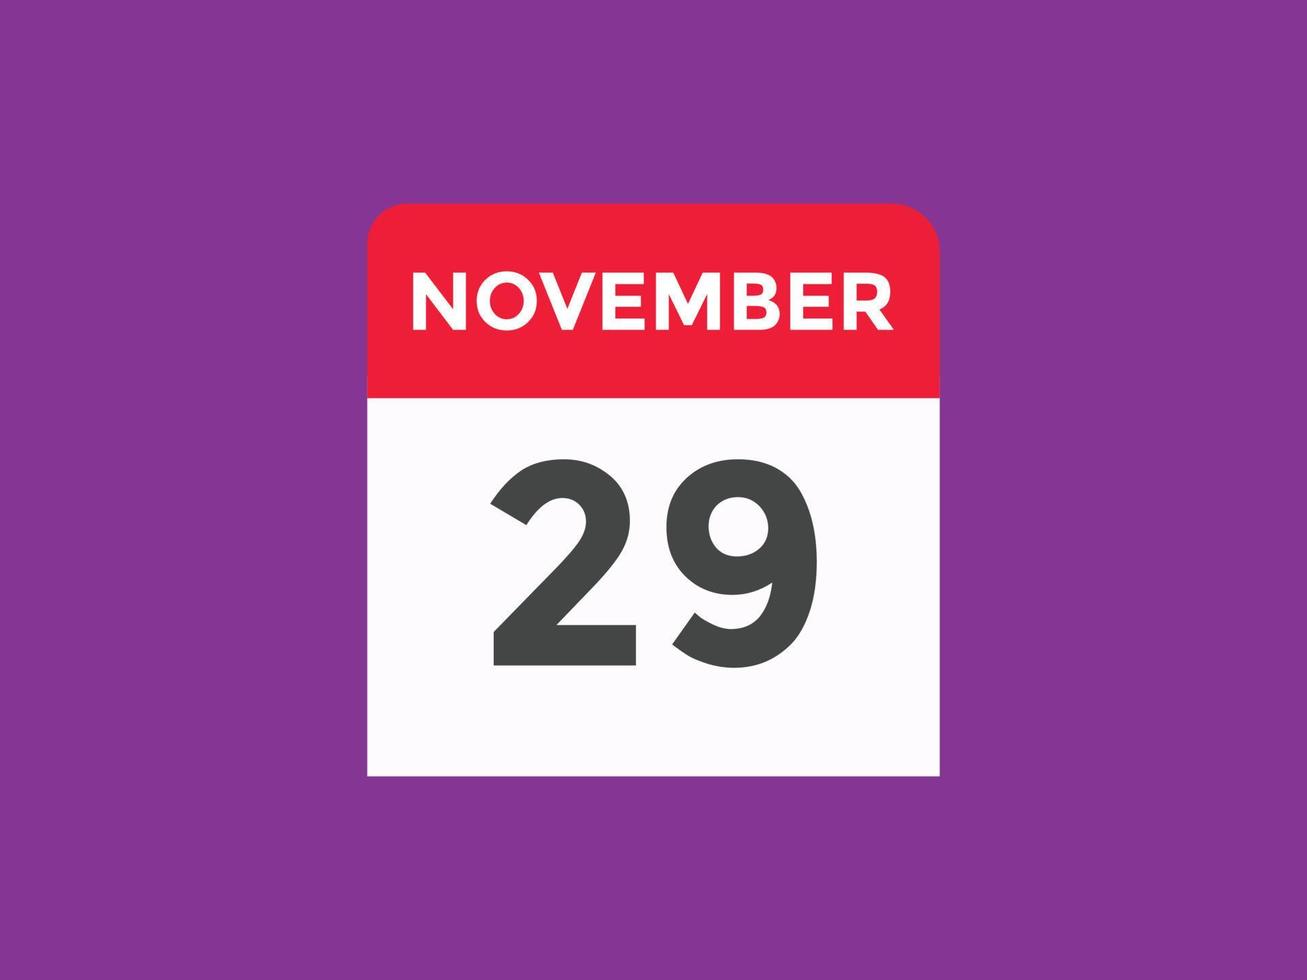 november 29 calendar reminder. 29th november daily calendar icon template. Calendar 29th november icon Design template. Vector illustration